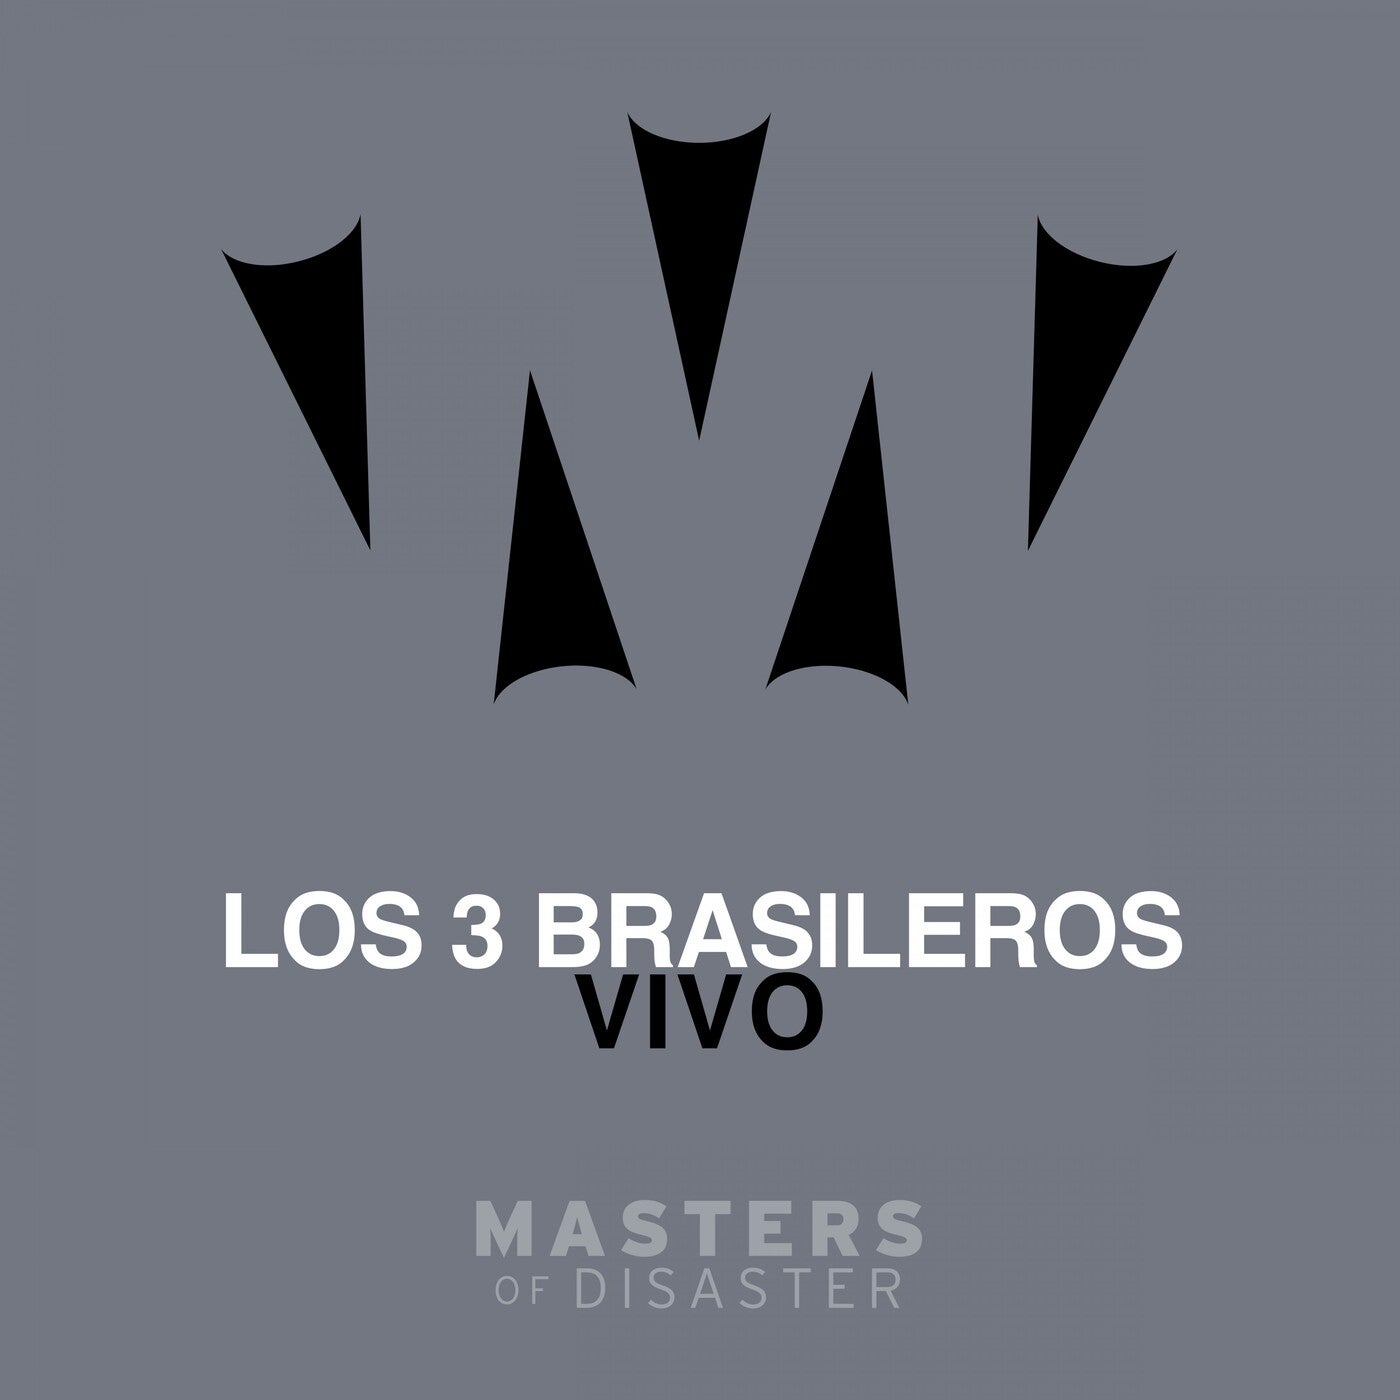 Vivo Mix) by 3 Brasileros on Beatport